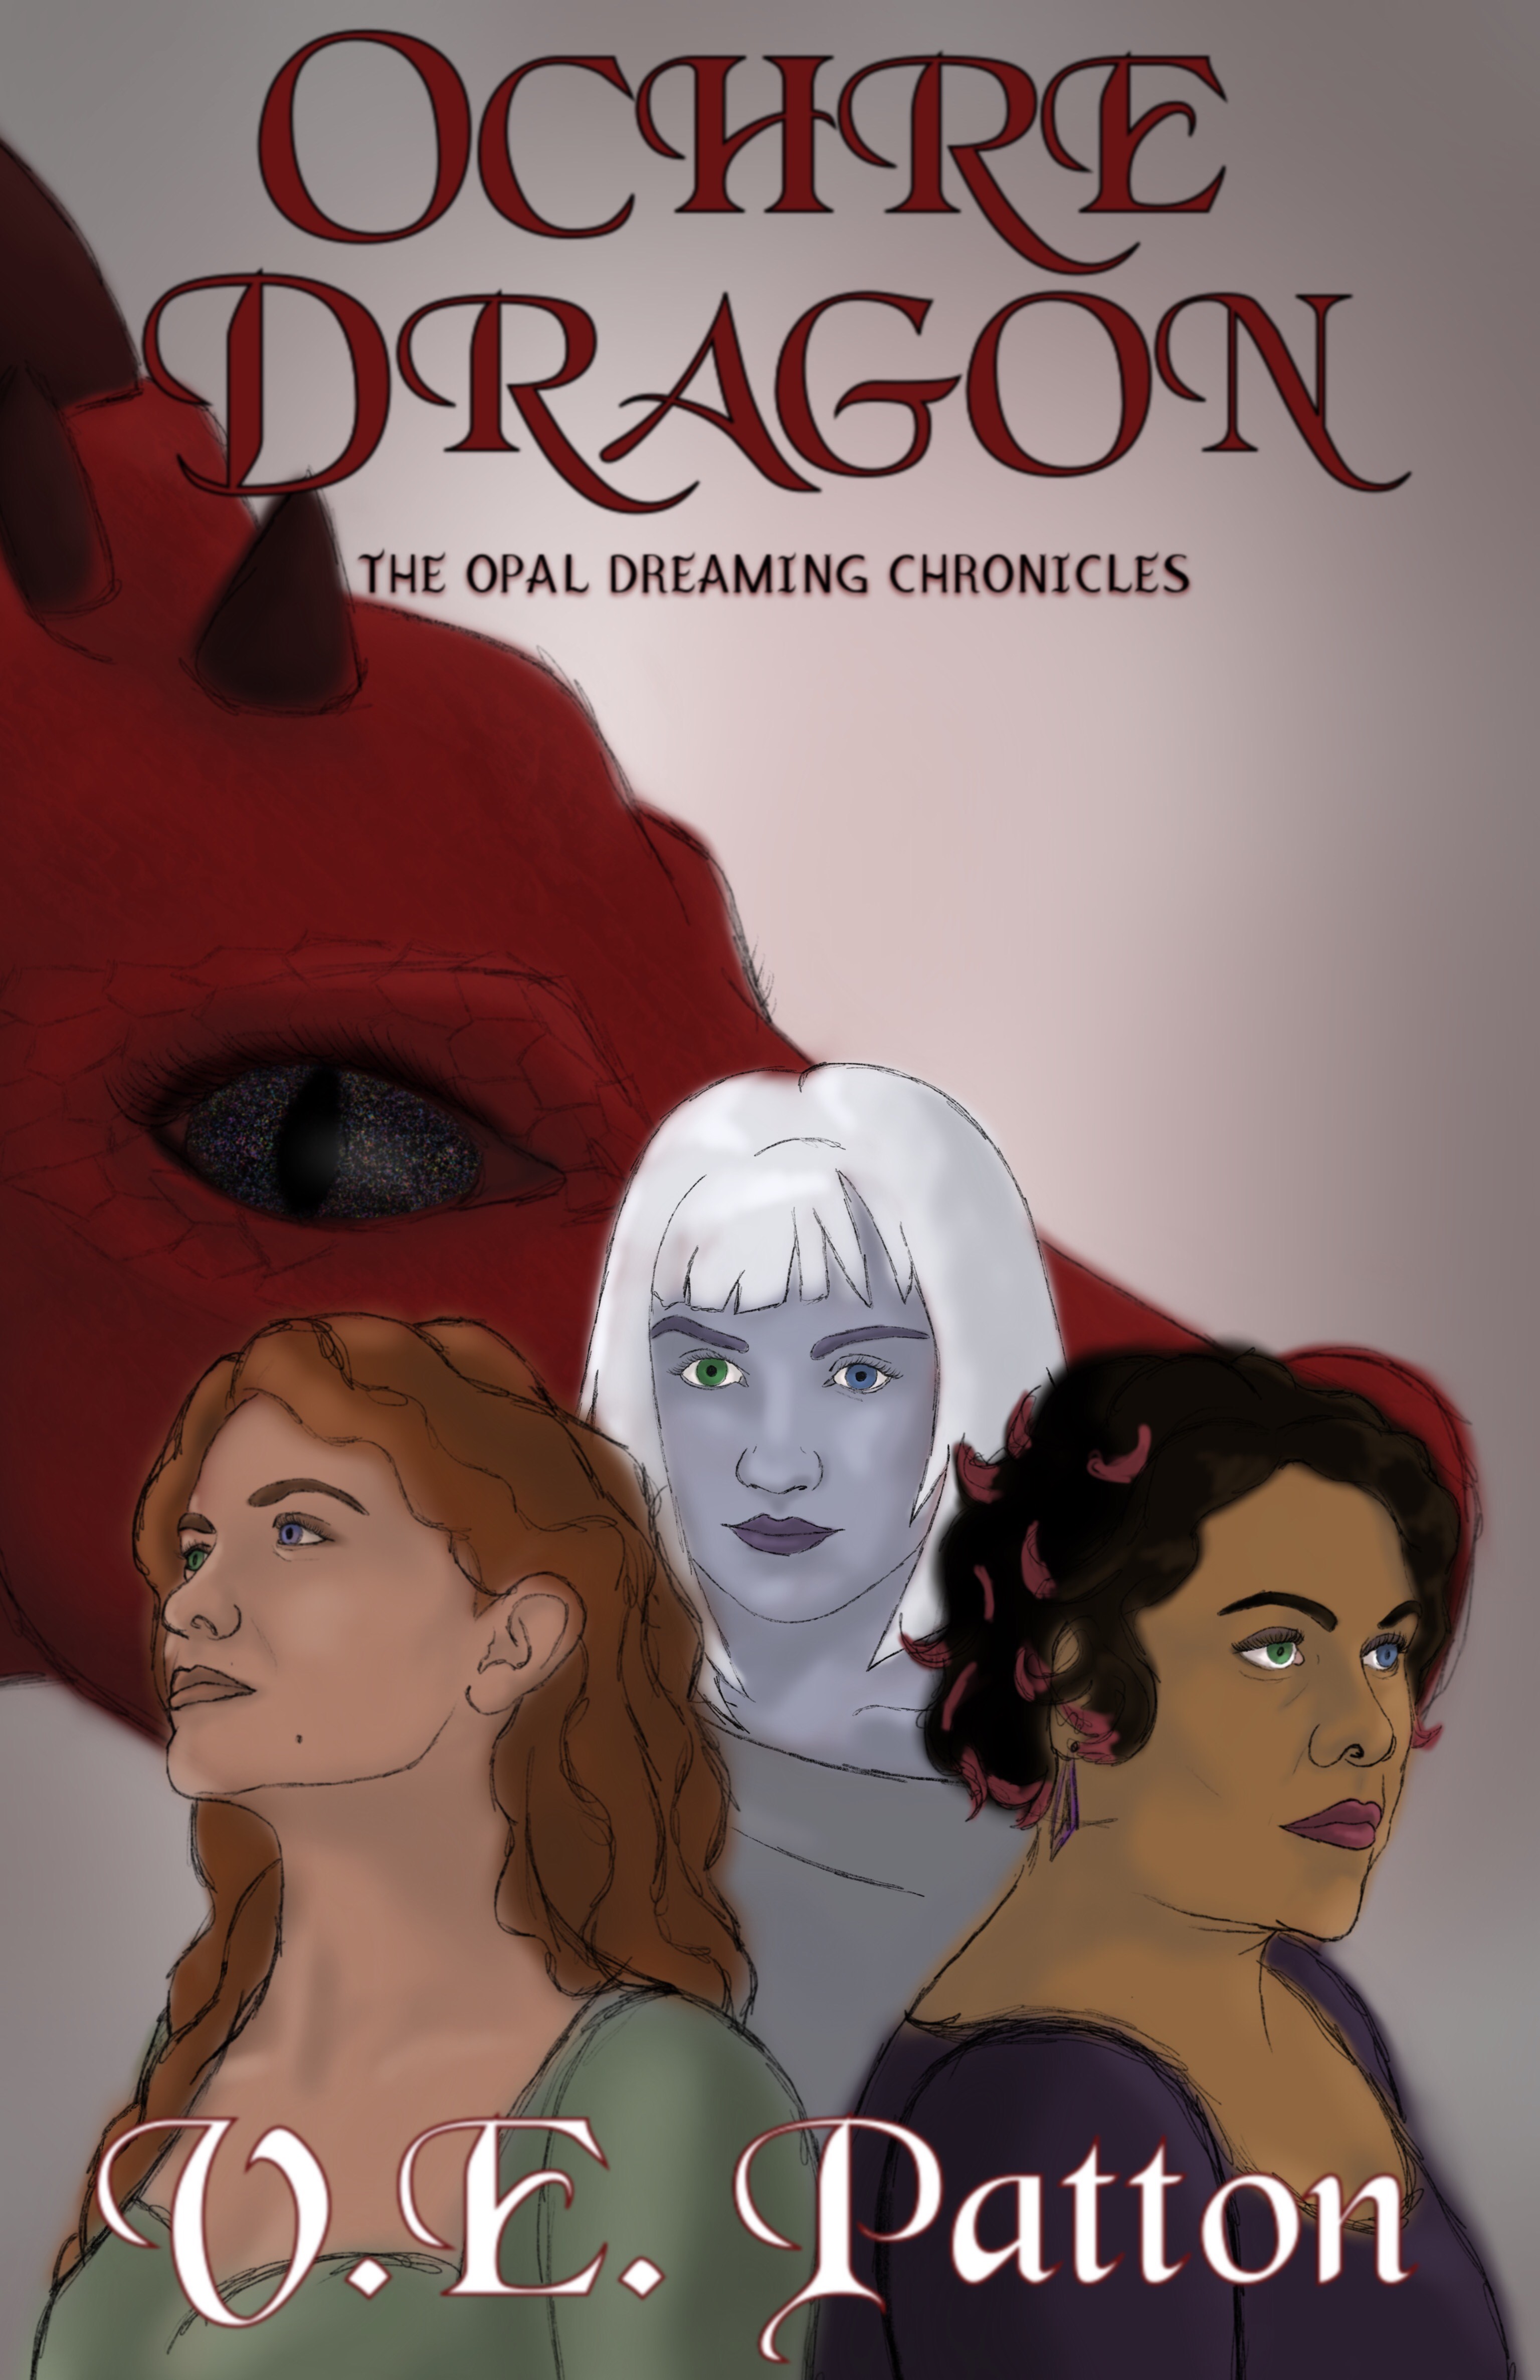 Three women and a dragon